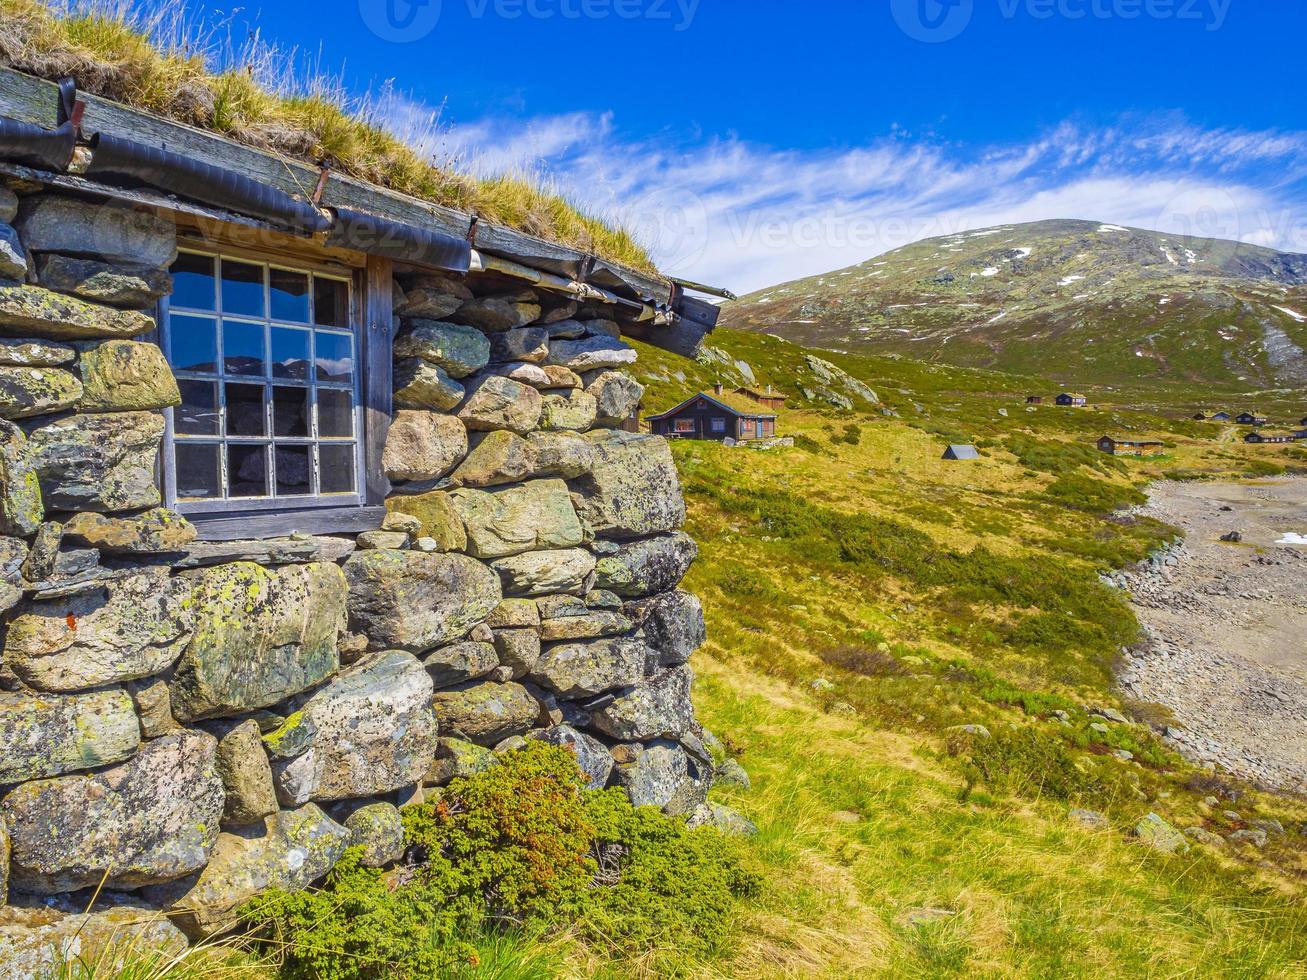 vavatn lac panorama paysage huttes montagnes enneigées hemsedal norvège. photo